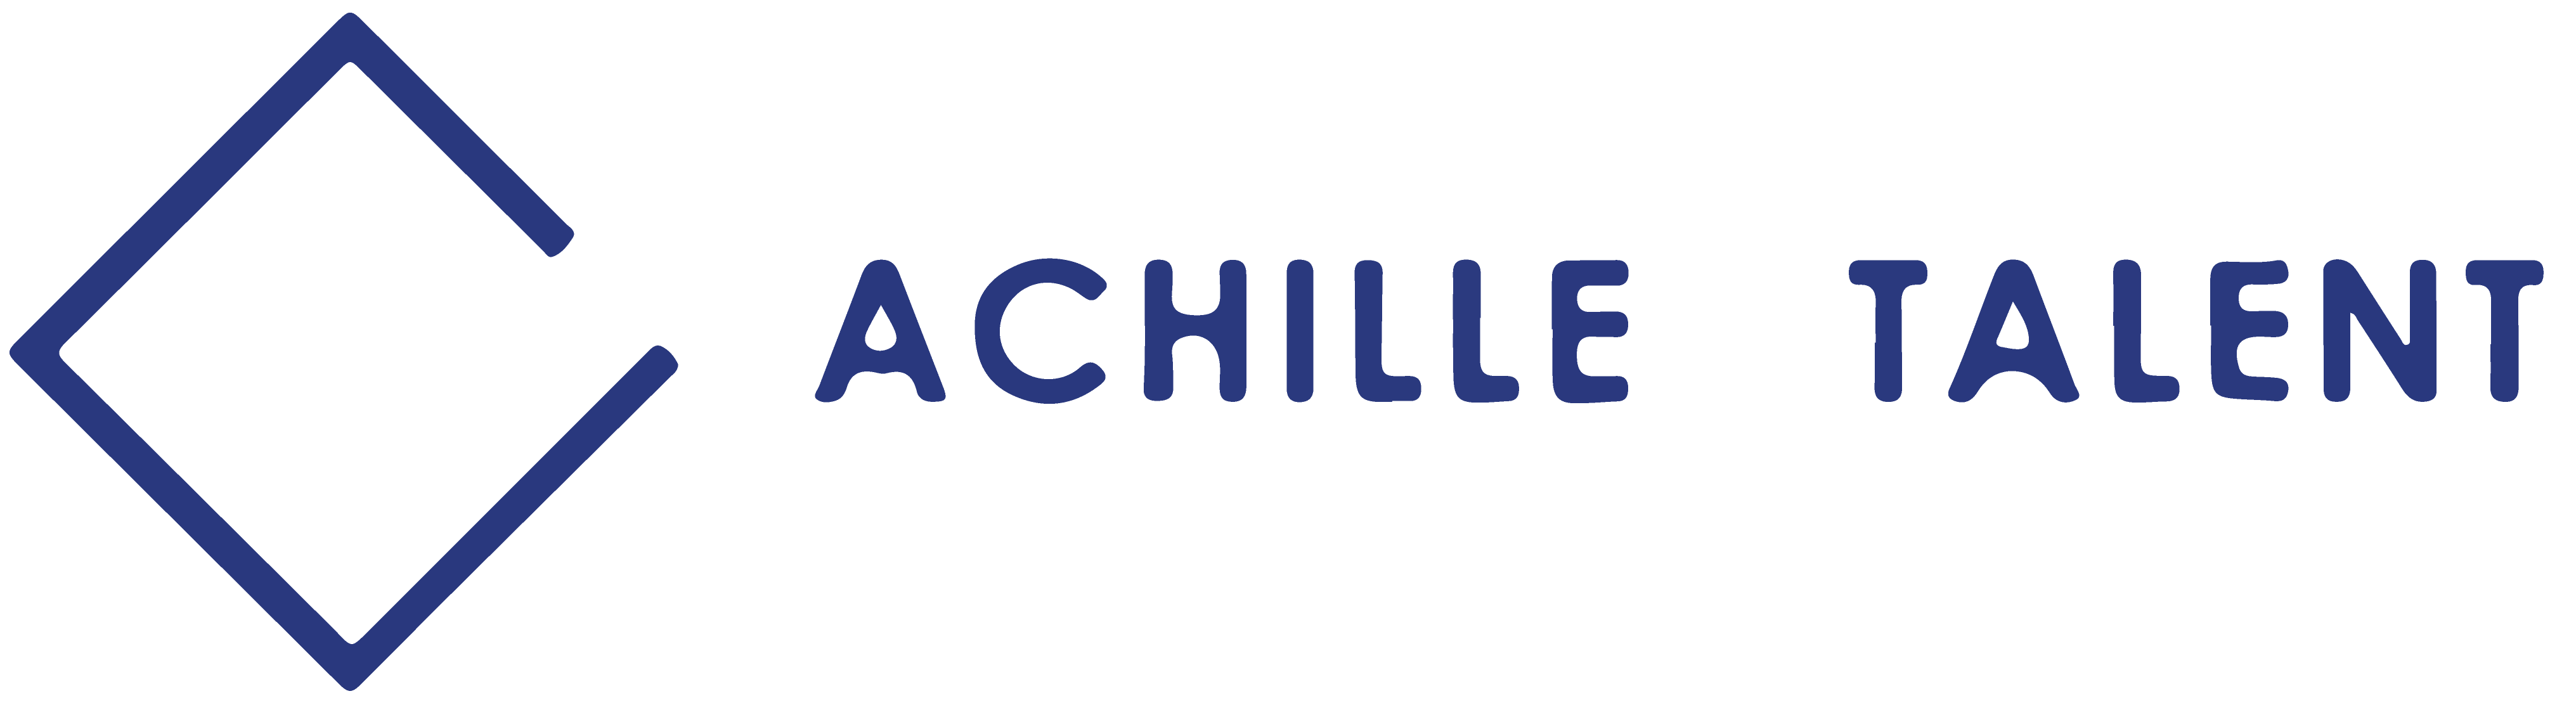 Logo Achille Talent bleu